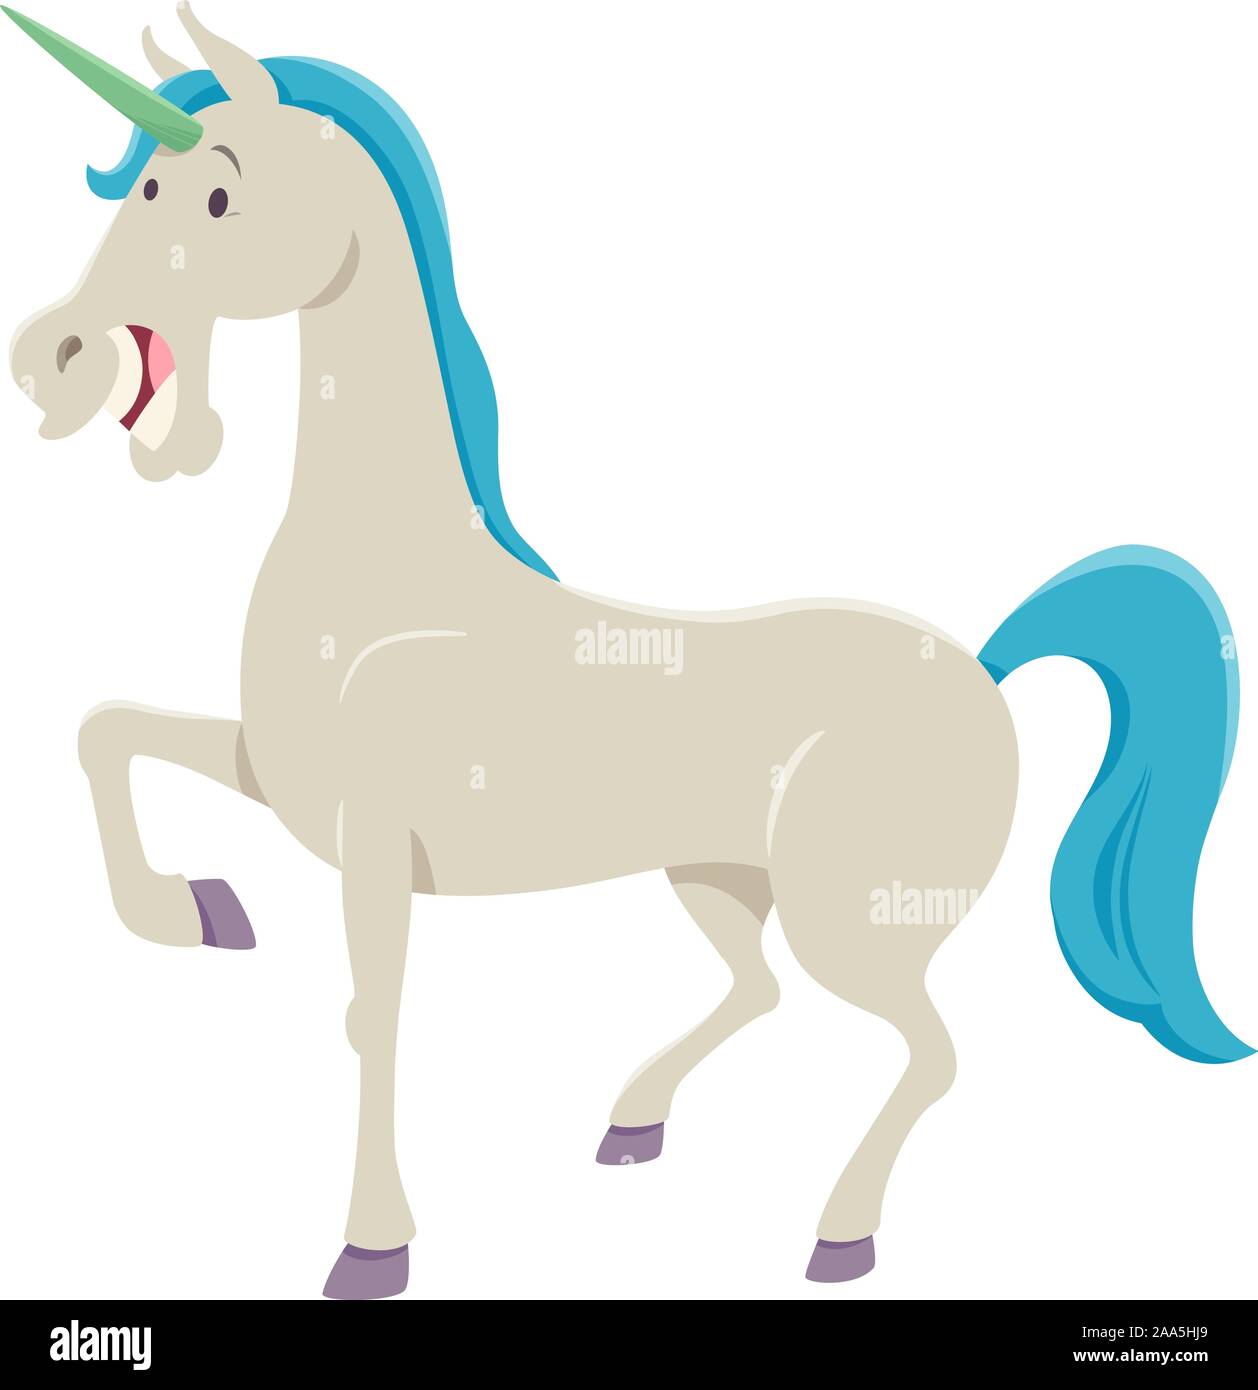 Cartoon Illustration of Funny Unicorn Fantasy Animal Character Stock Vector